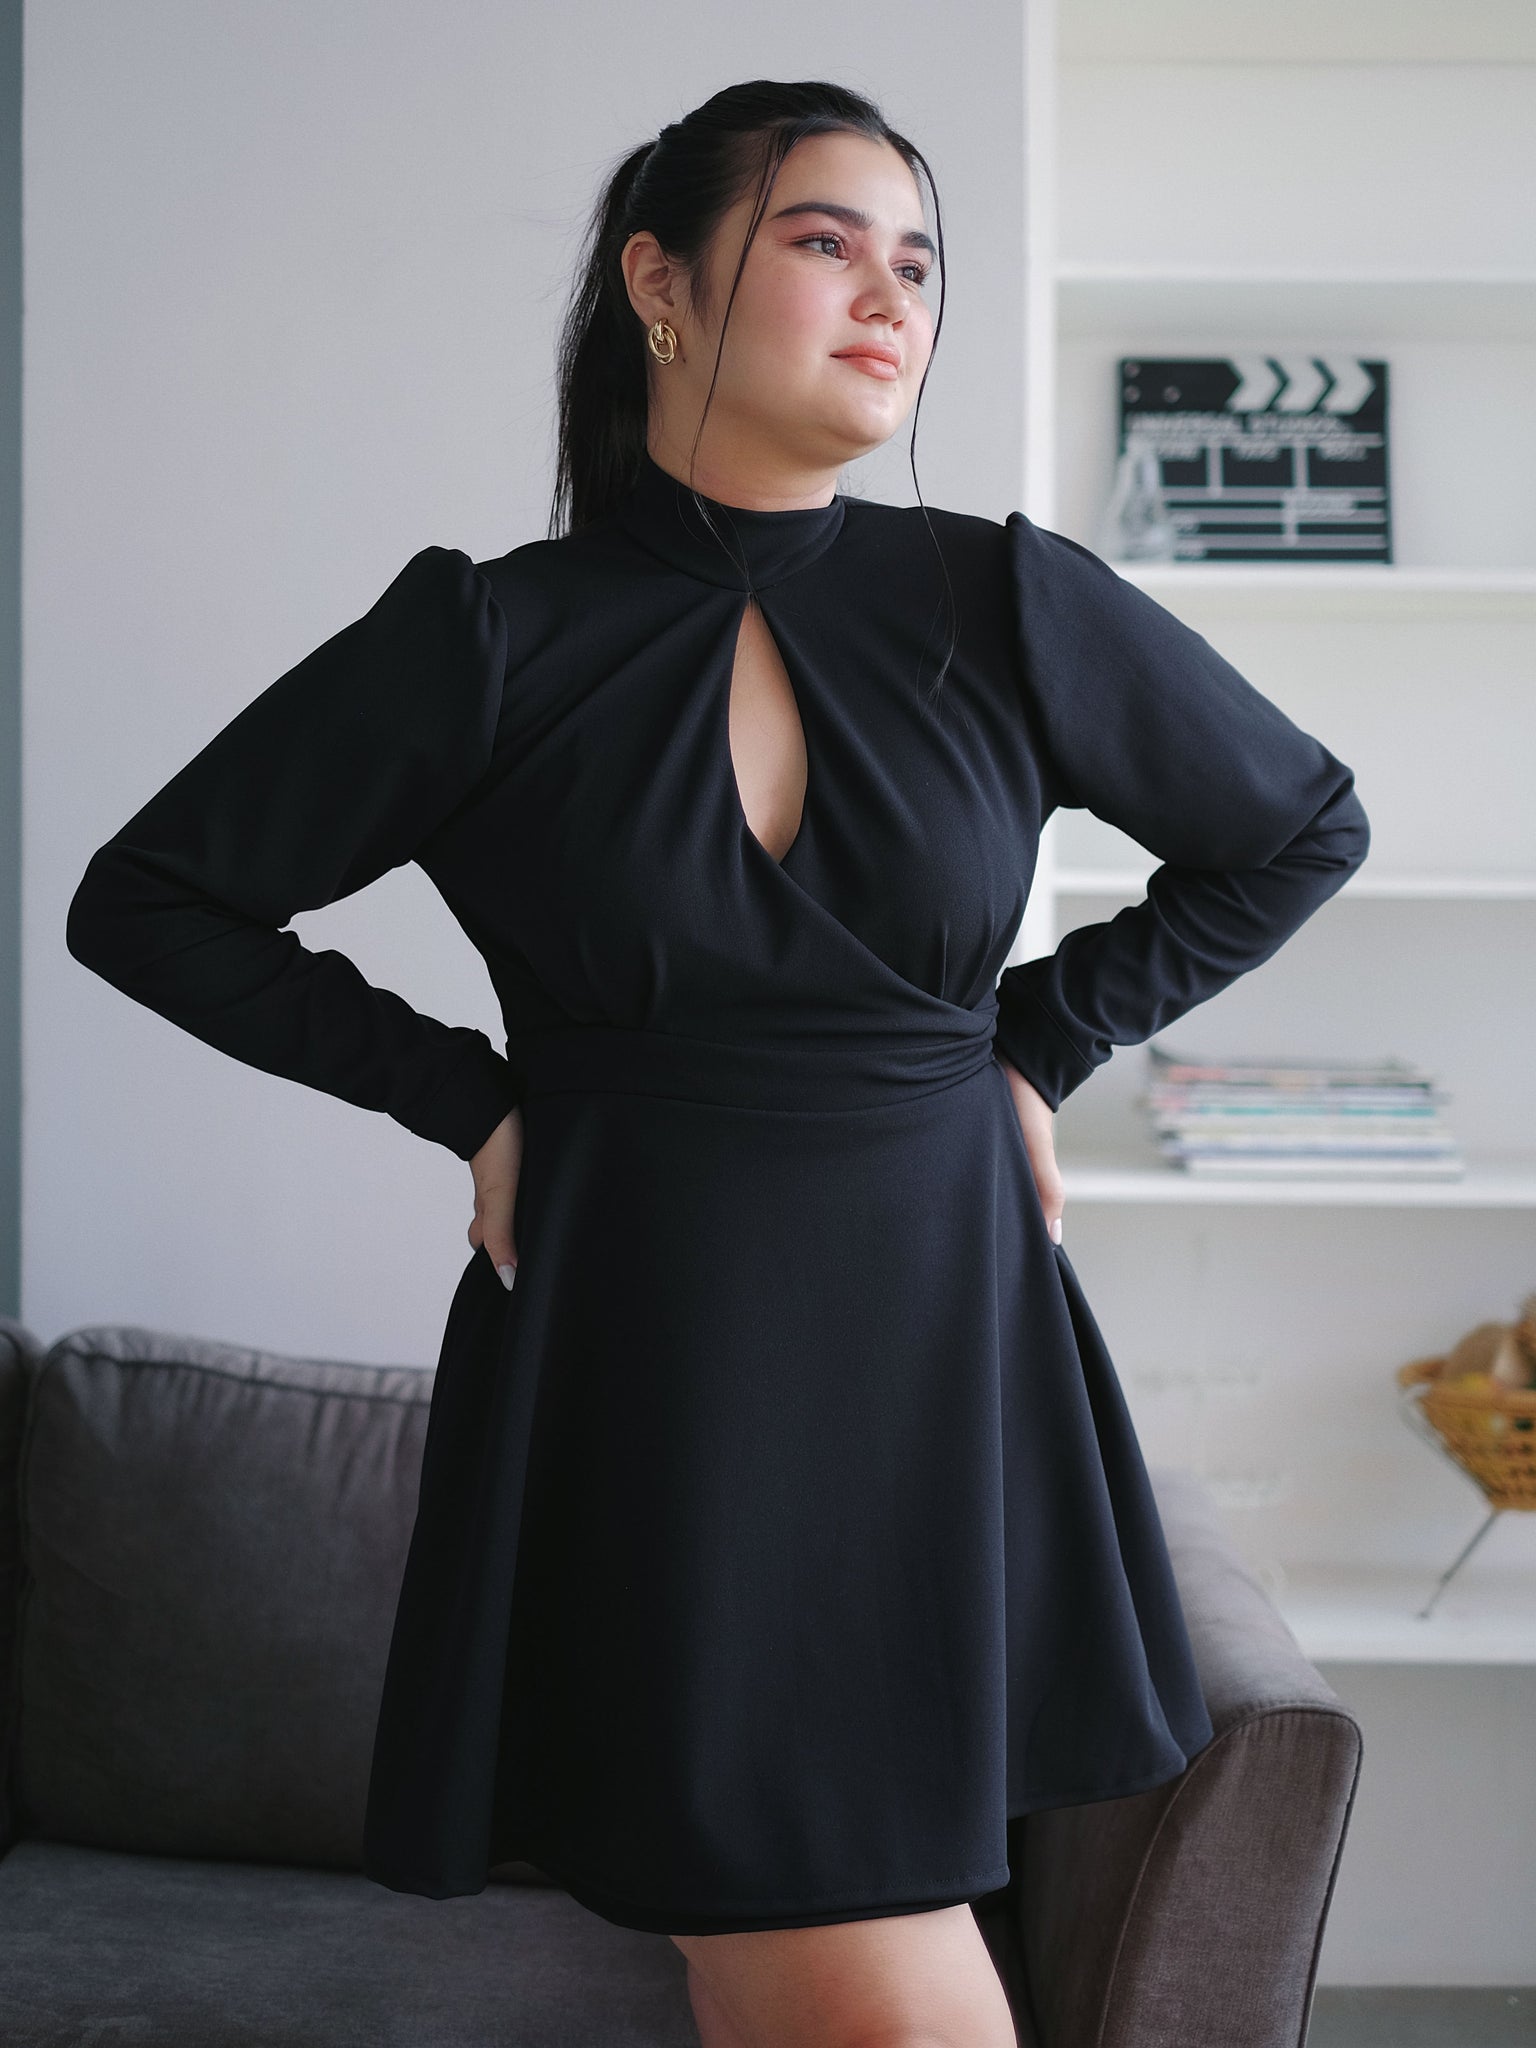 Natashia Dress - black